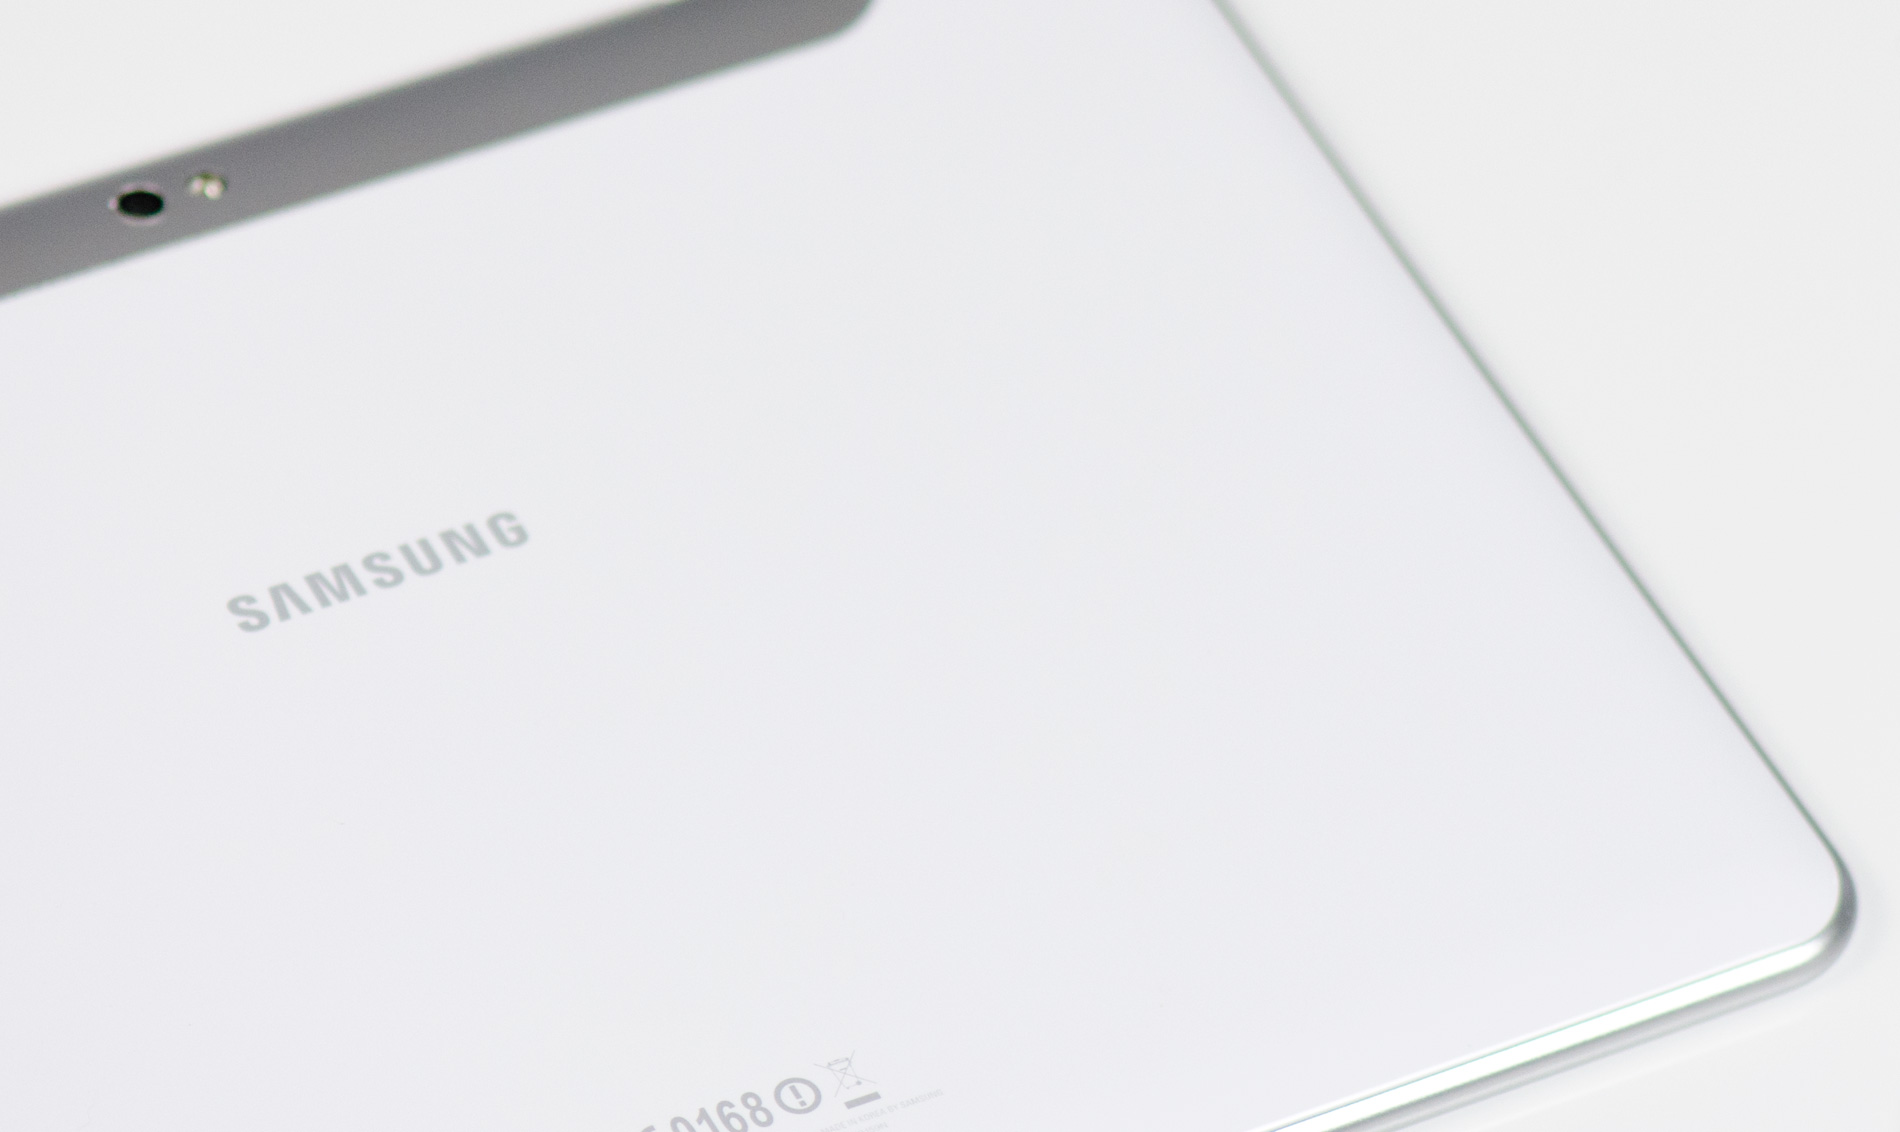 Doe herleven incident Vervorming The Hardware - Samsung Galaxy Tab 10.1 Review: The Sleekest Honeycomb Tablet